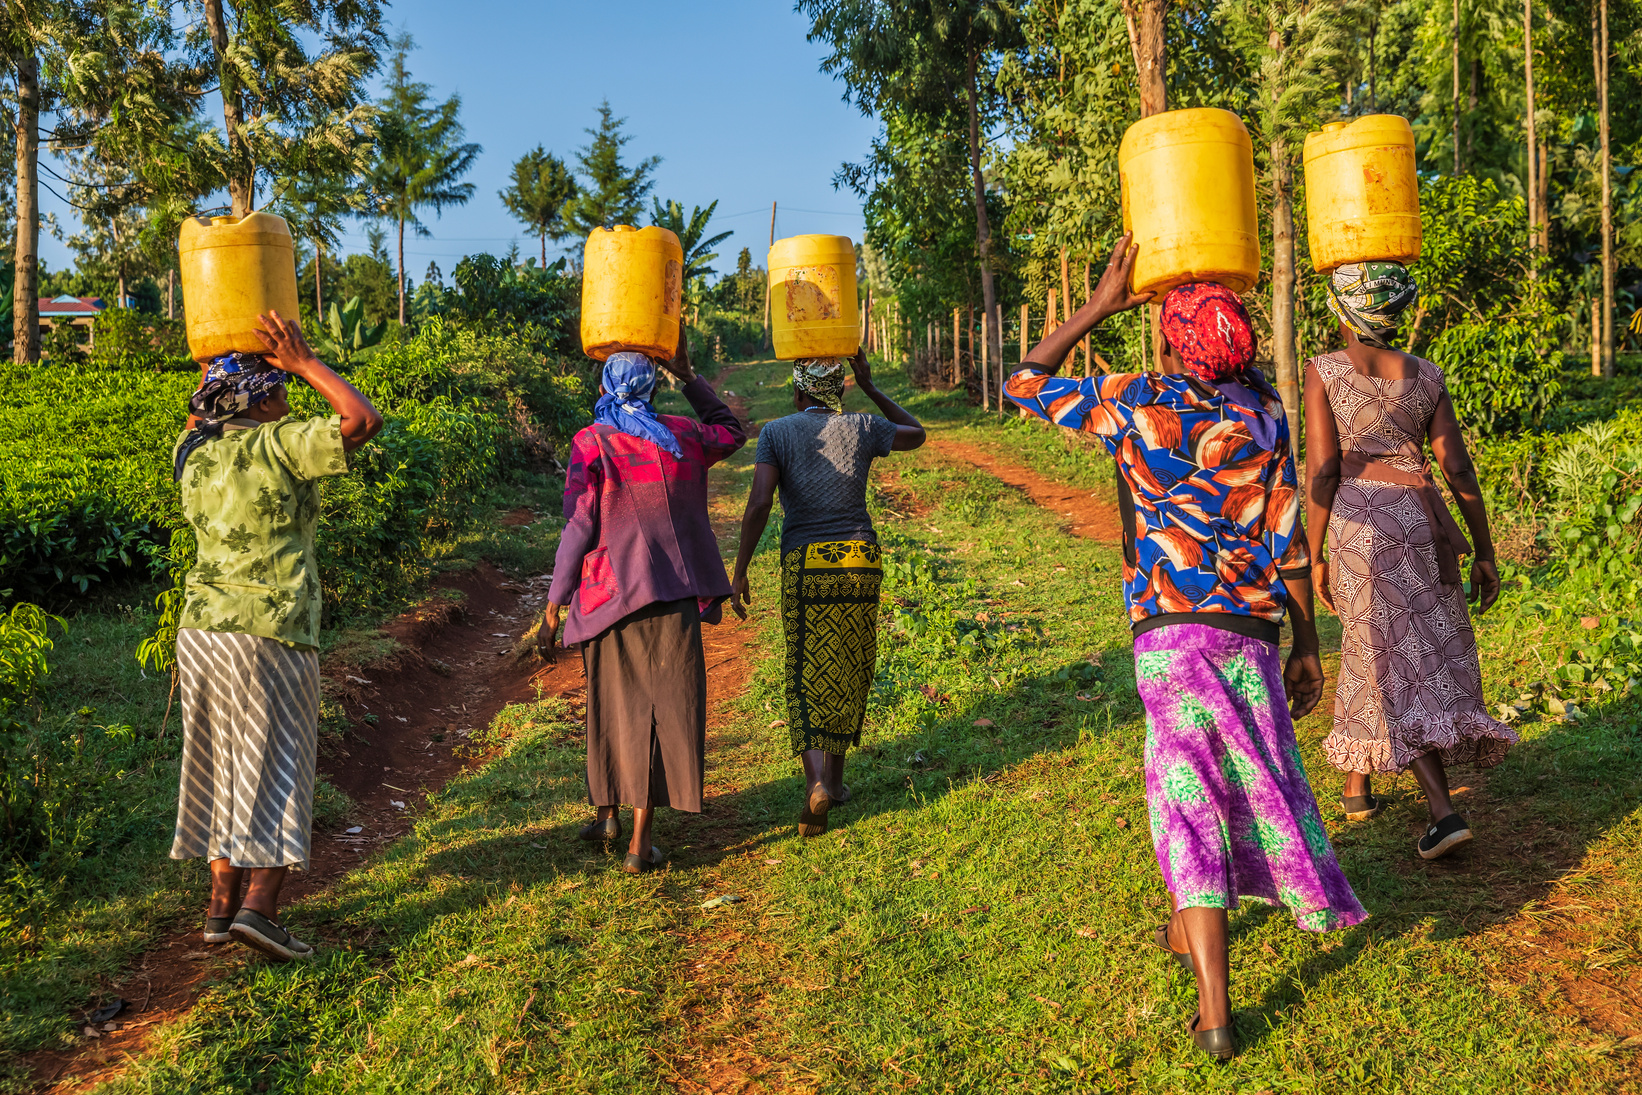 African women carrying water, Kenya, East Africa